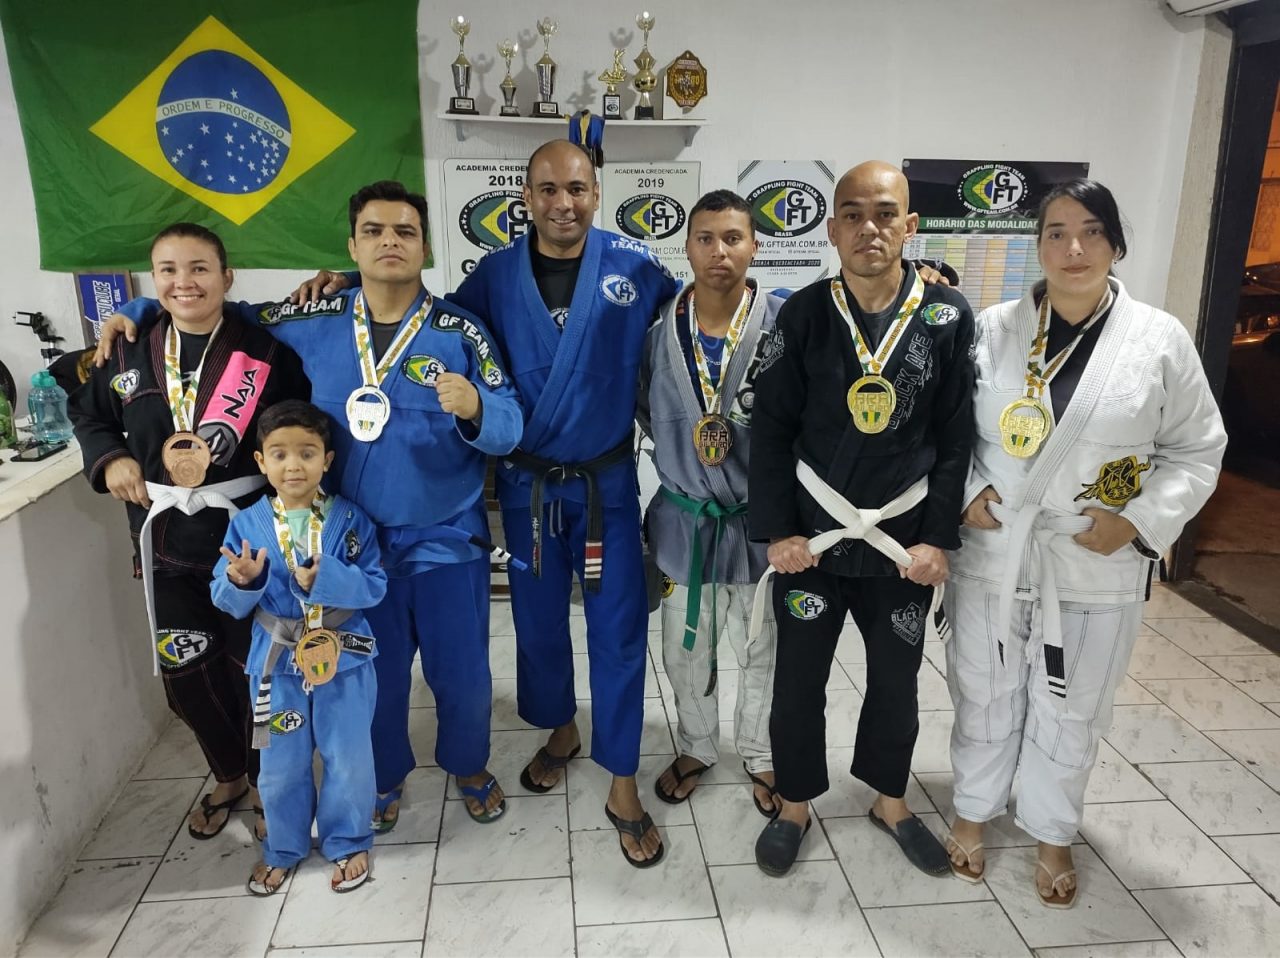 https://www.jornalacomarca.com.br/wp-content/uploads/2022/06/Esporte-Campeonato-de-Jiu-Jitsu-3-1280x958.jpg